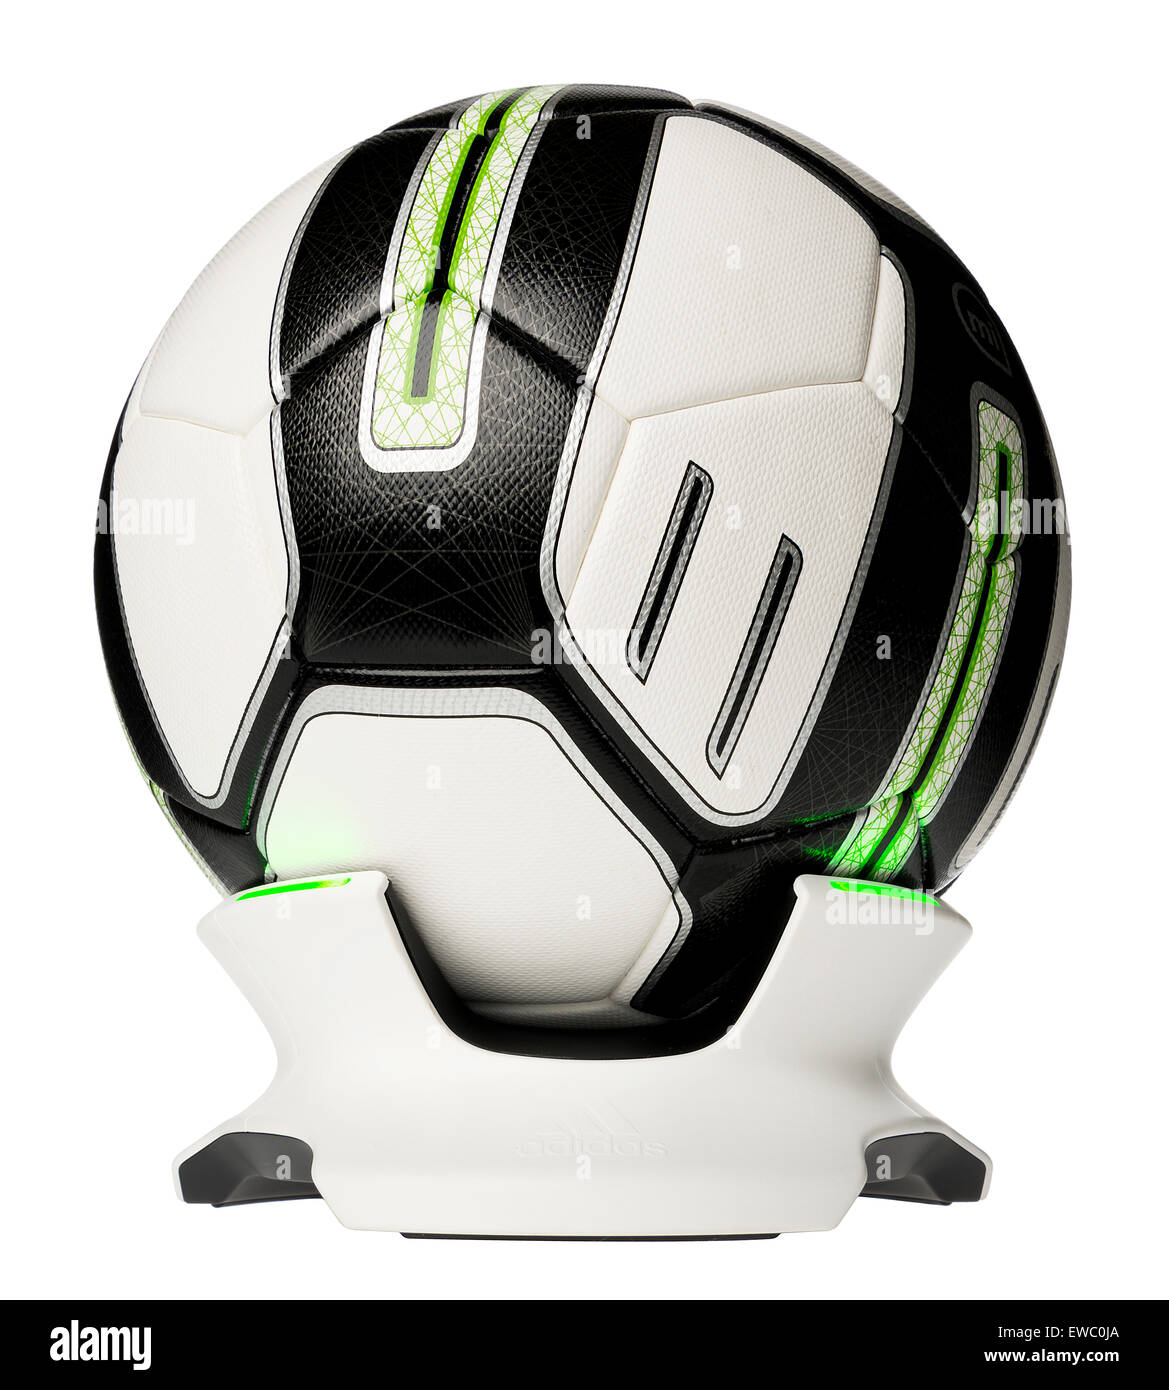 pasar por alto literalmente Restaurar Adidas MiCoach football. Training program. Smart ball. Training ball with  integrated sensor Stock Photo - Alamy